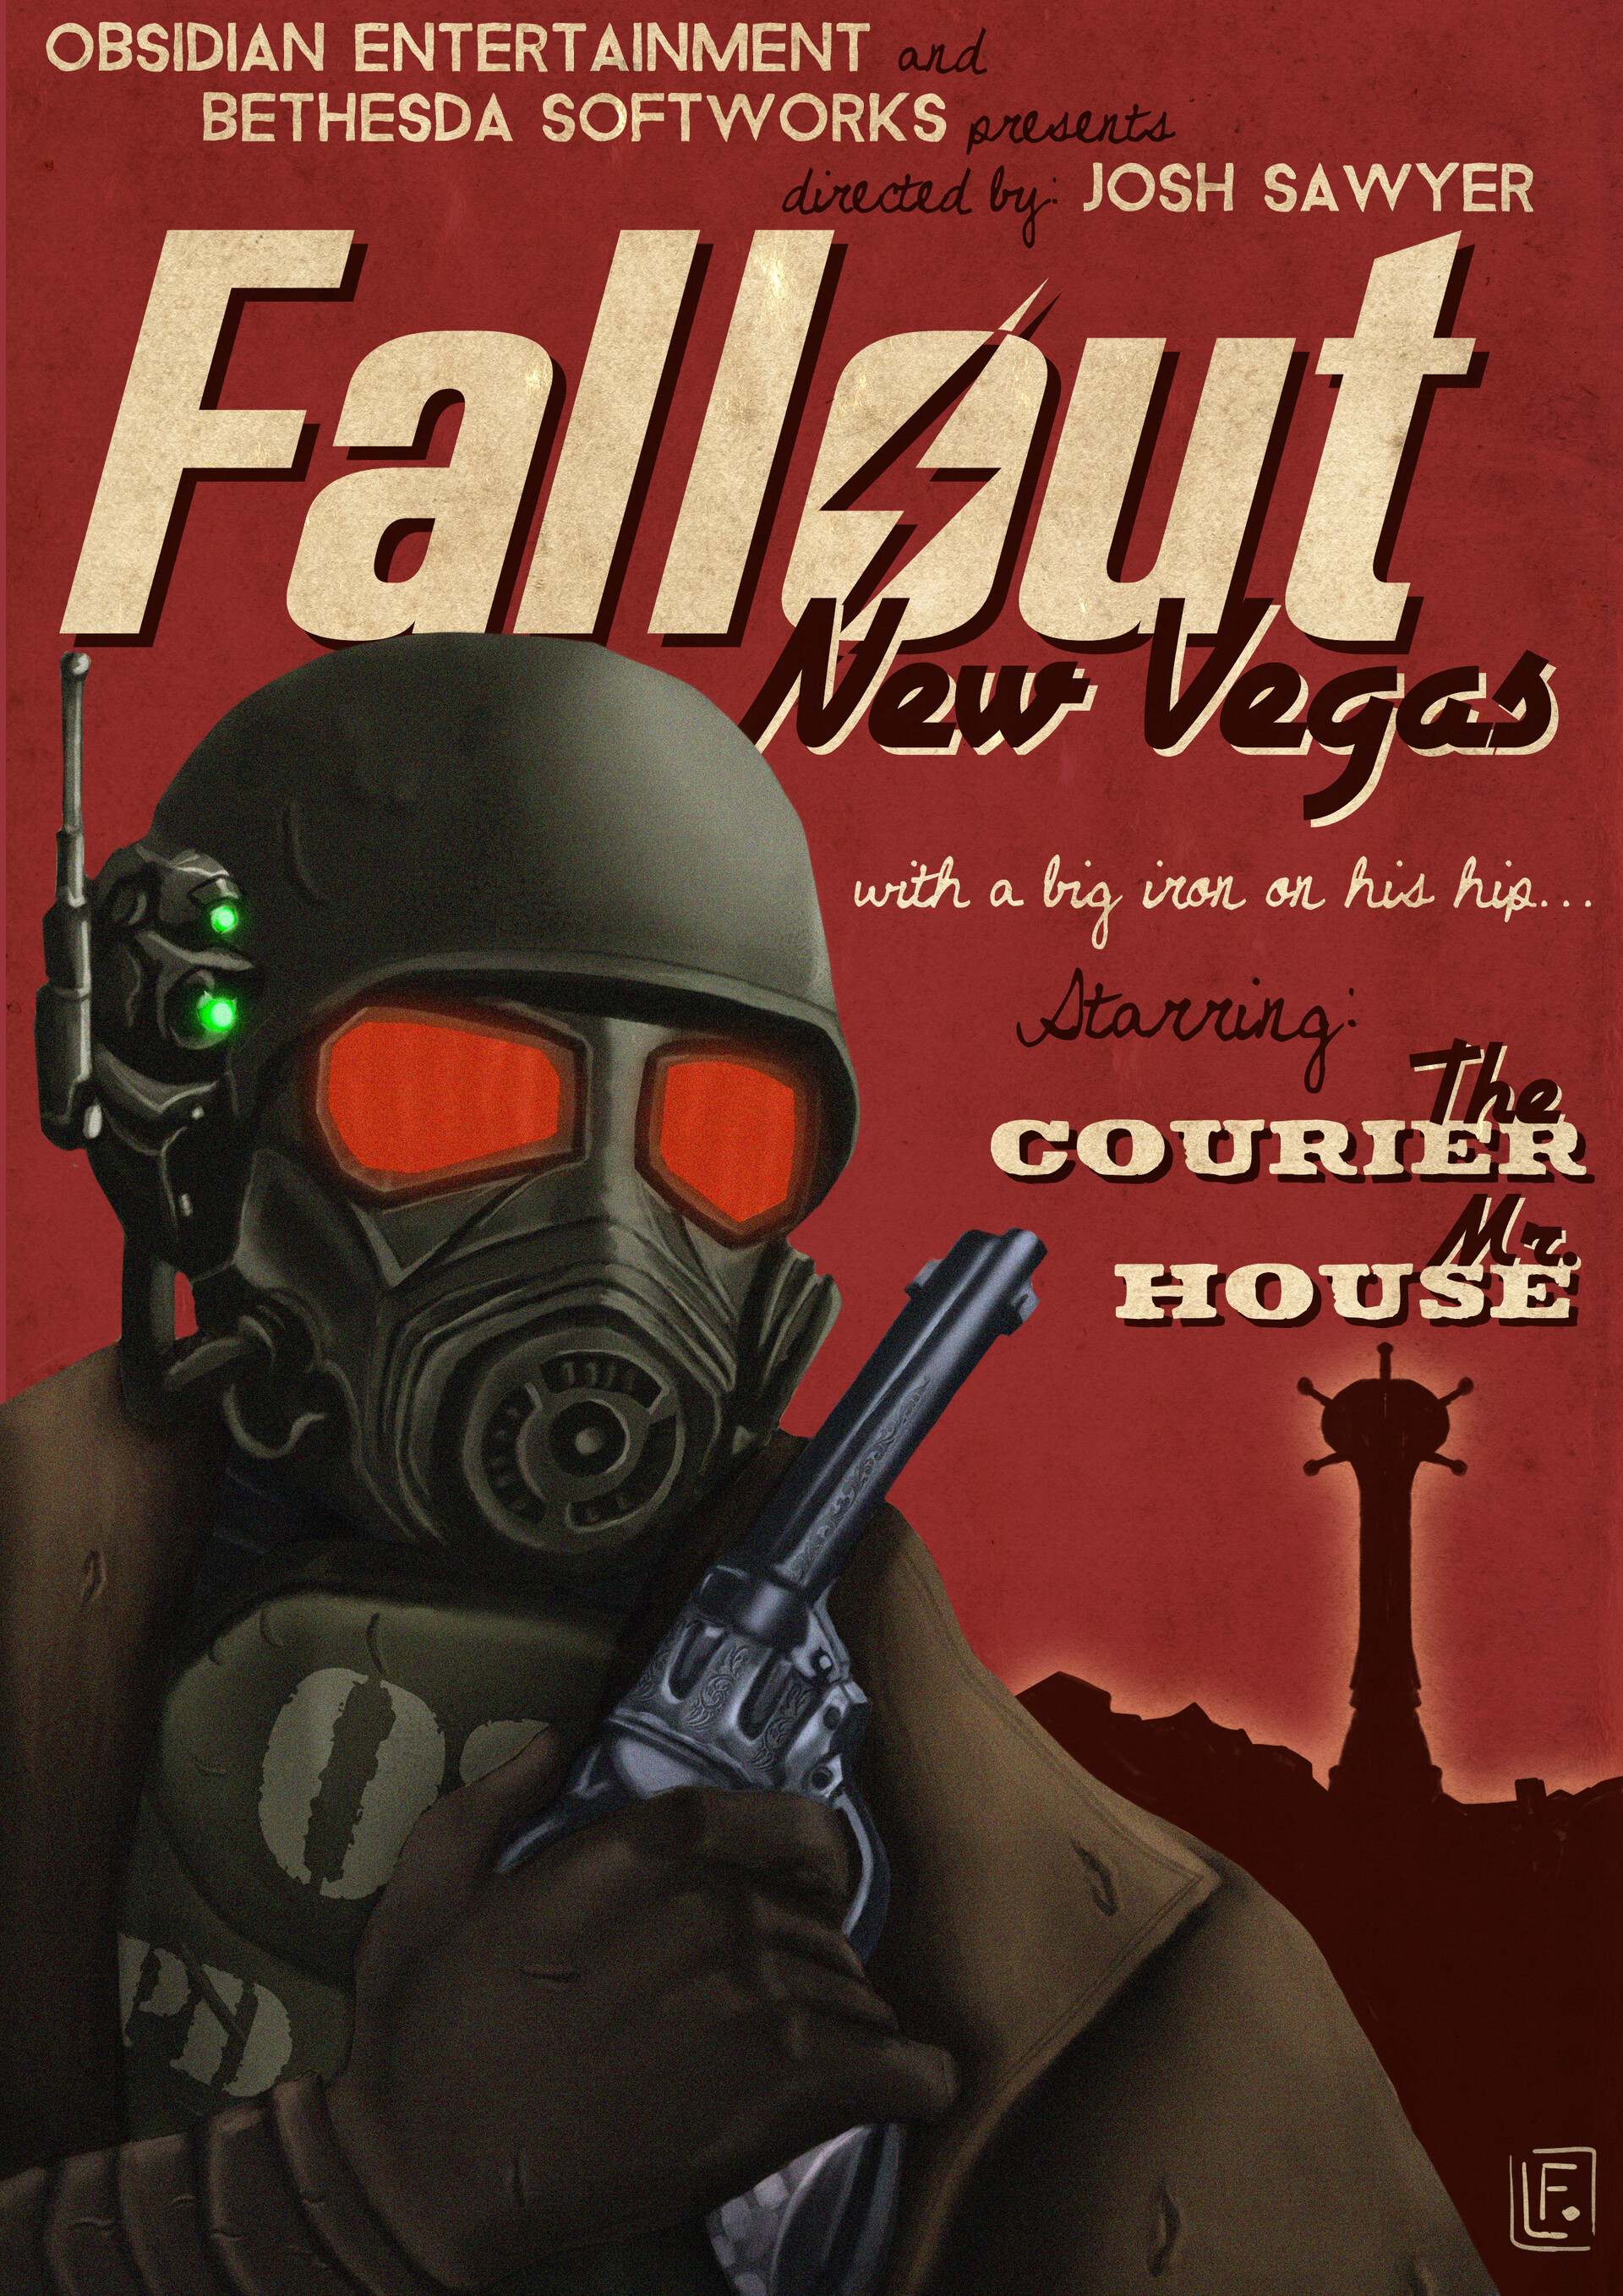 ArtStation - Fallout New Vegas Poster